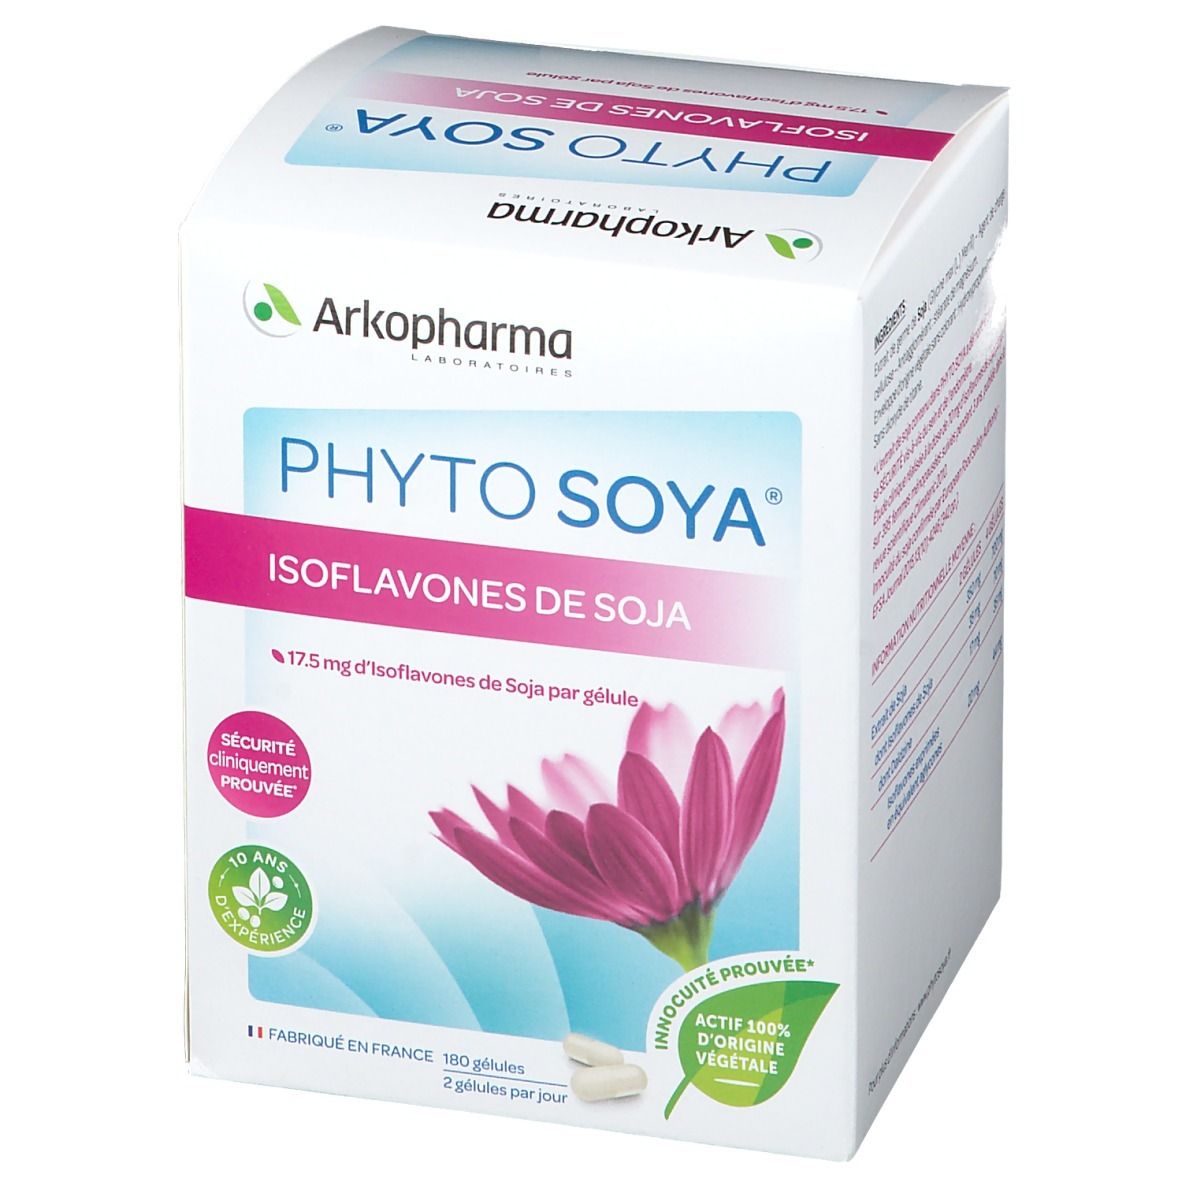 Arkopharma Phyto Soya 17,5 mg